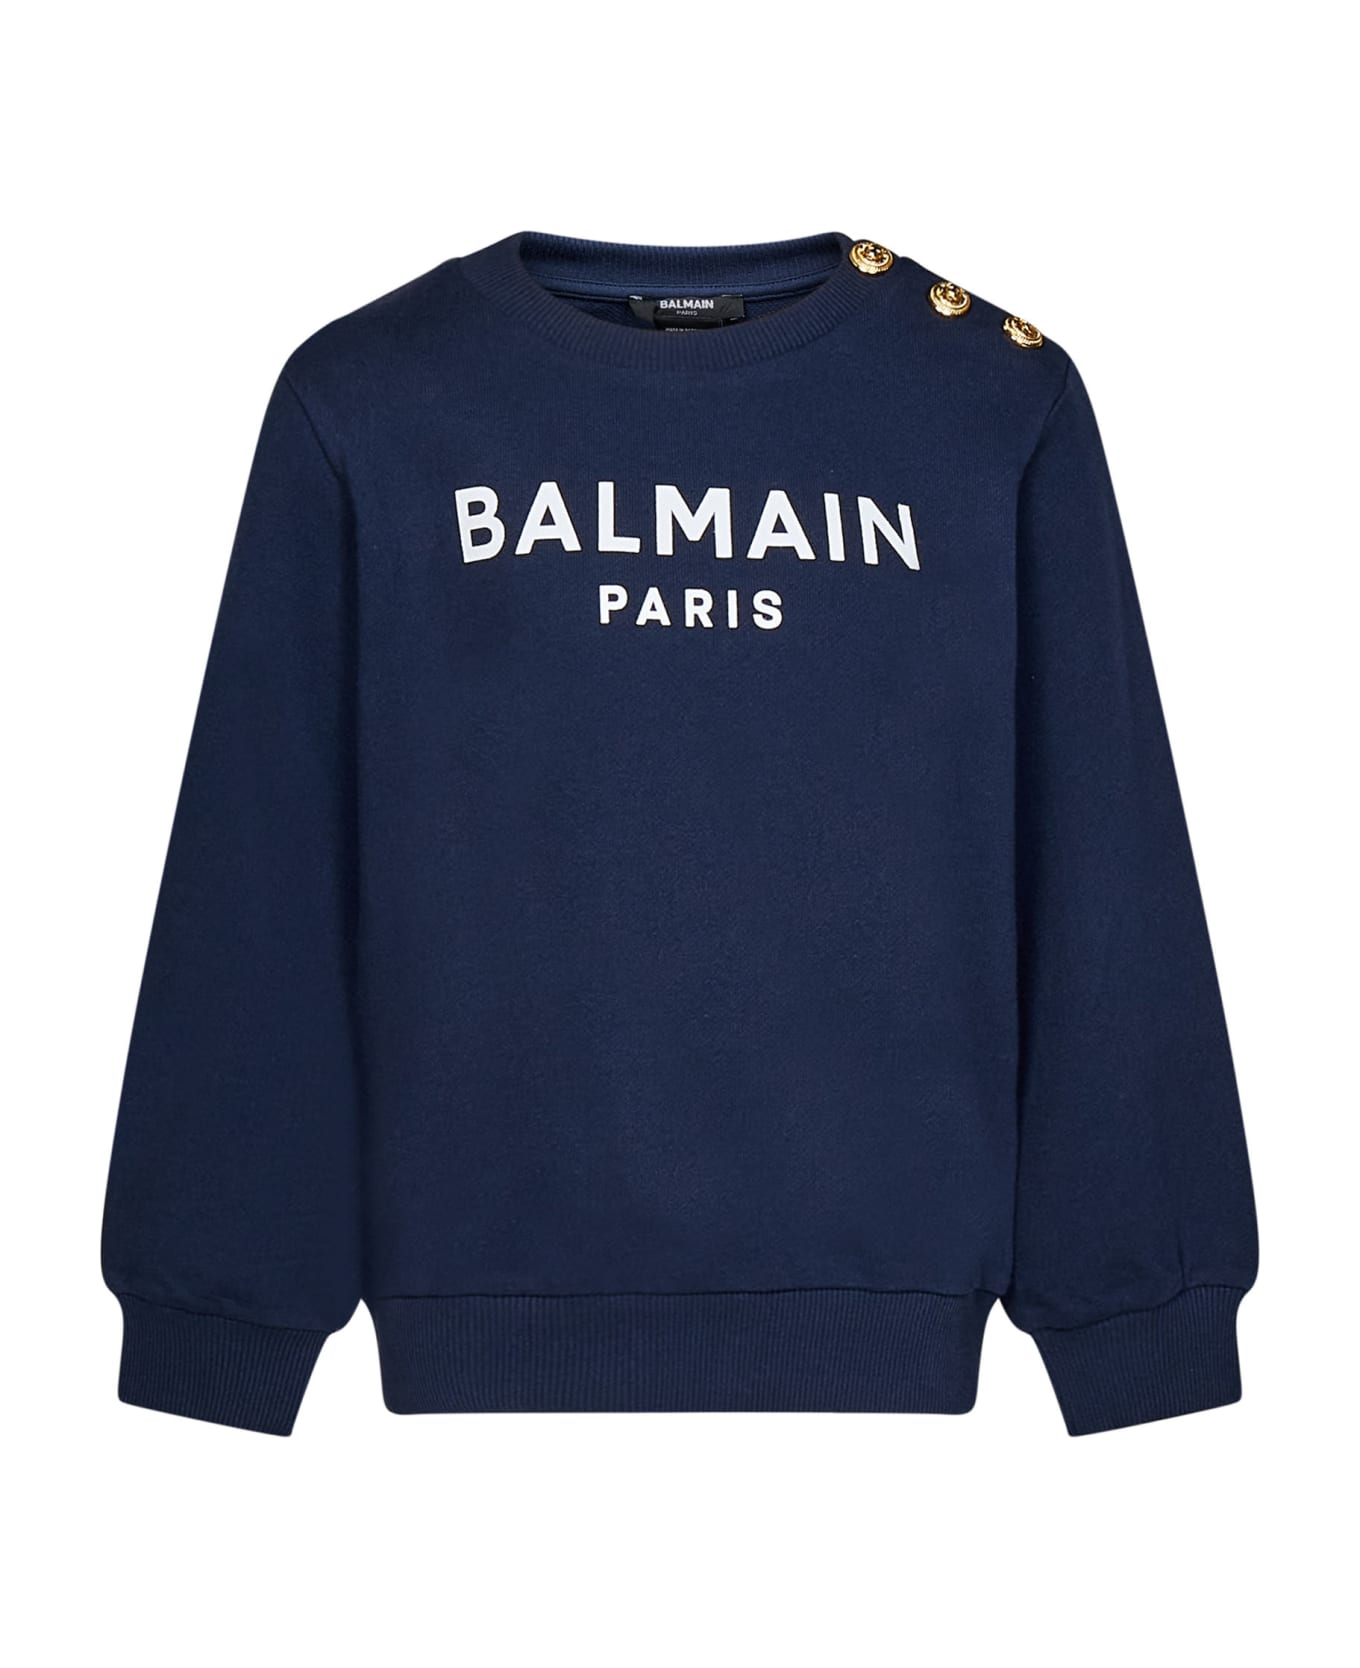 Balmain Paris Kids Sweatshirt - Blue